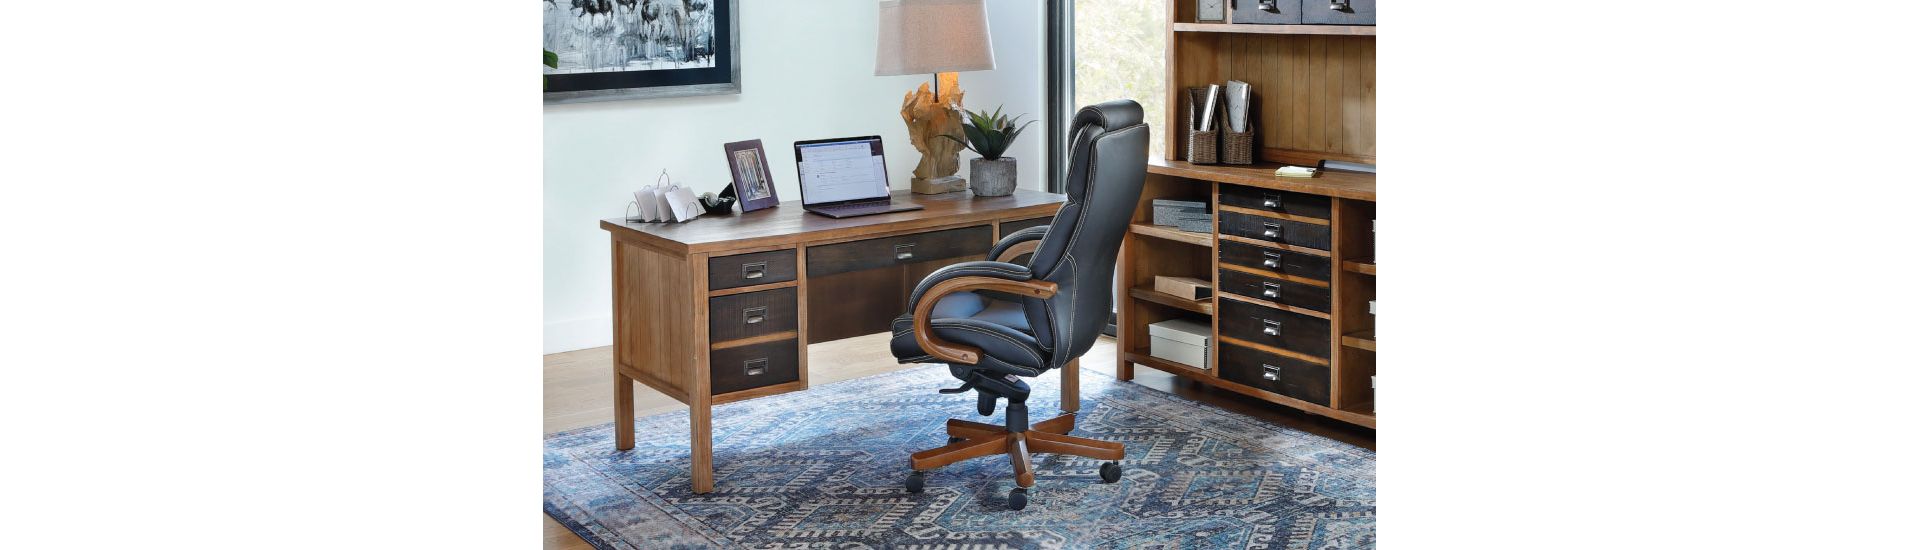 https://furniturerow.scene7.com/is/image/FurnitureRow/Office-DeskChairs-Heritage?dpr=off&fit=fit,1&wid=1920&fmt=jpg